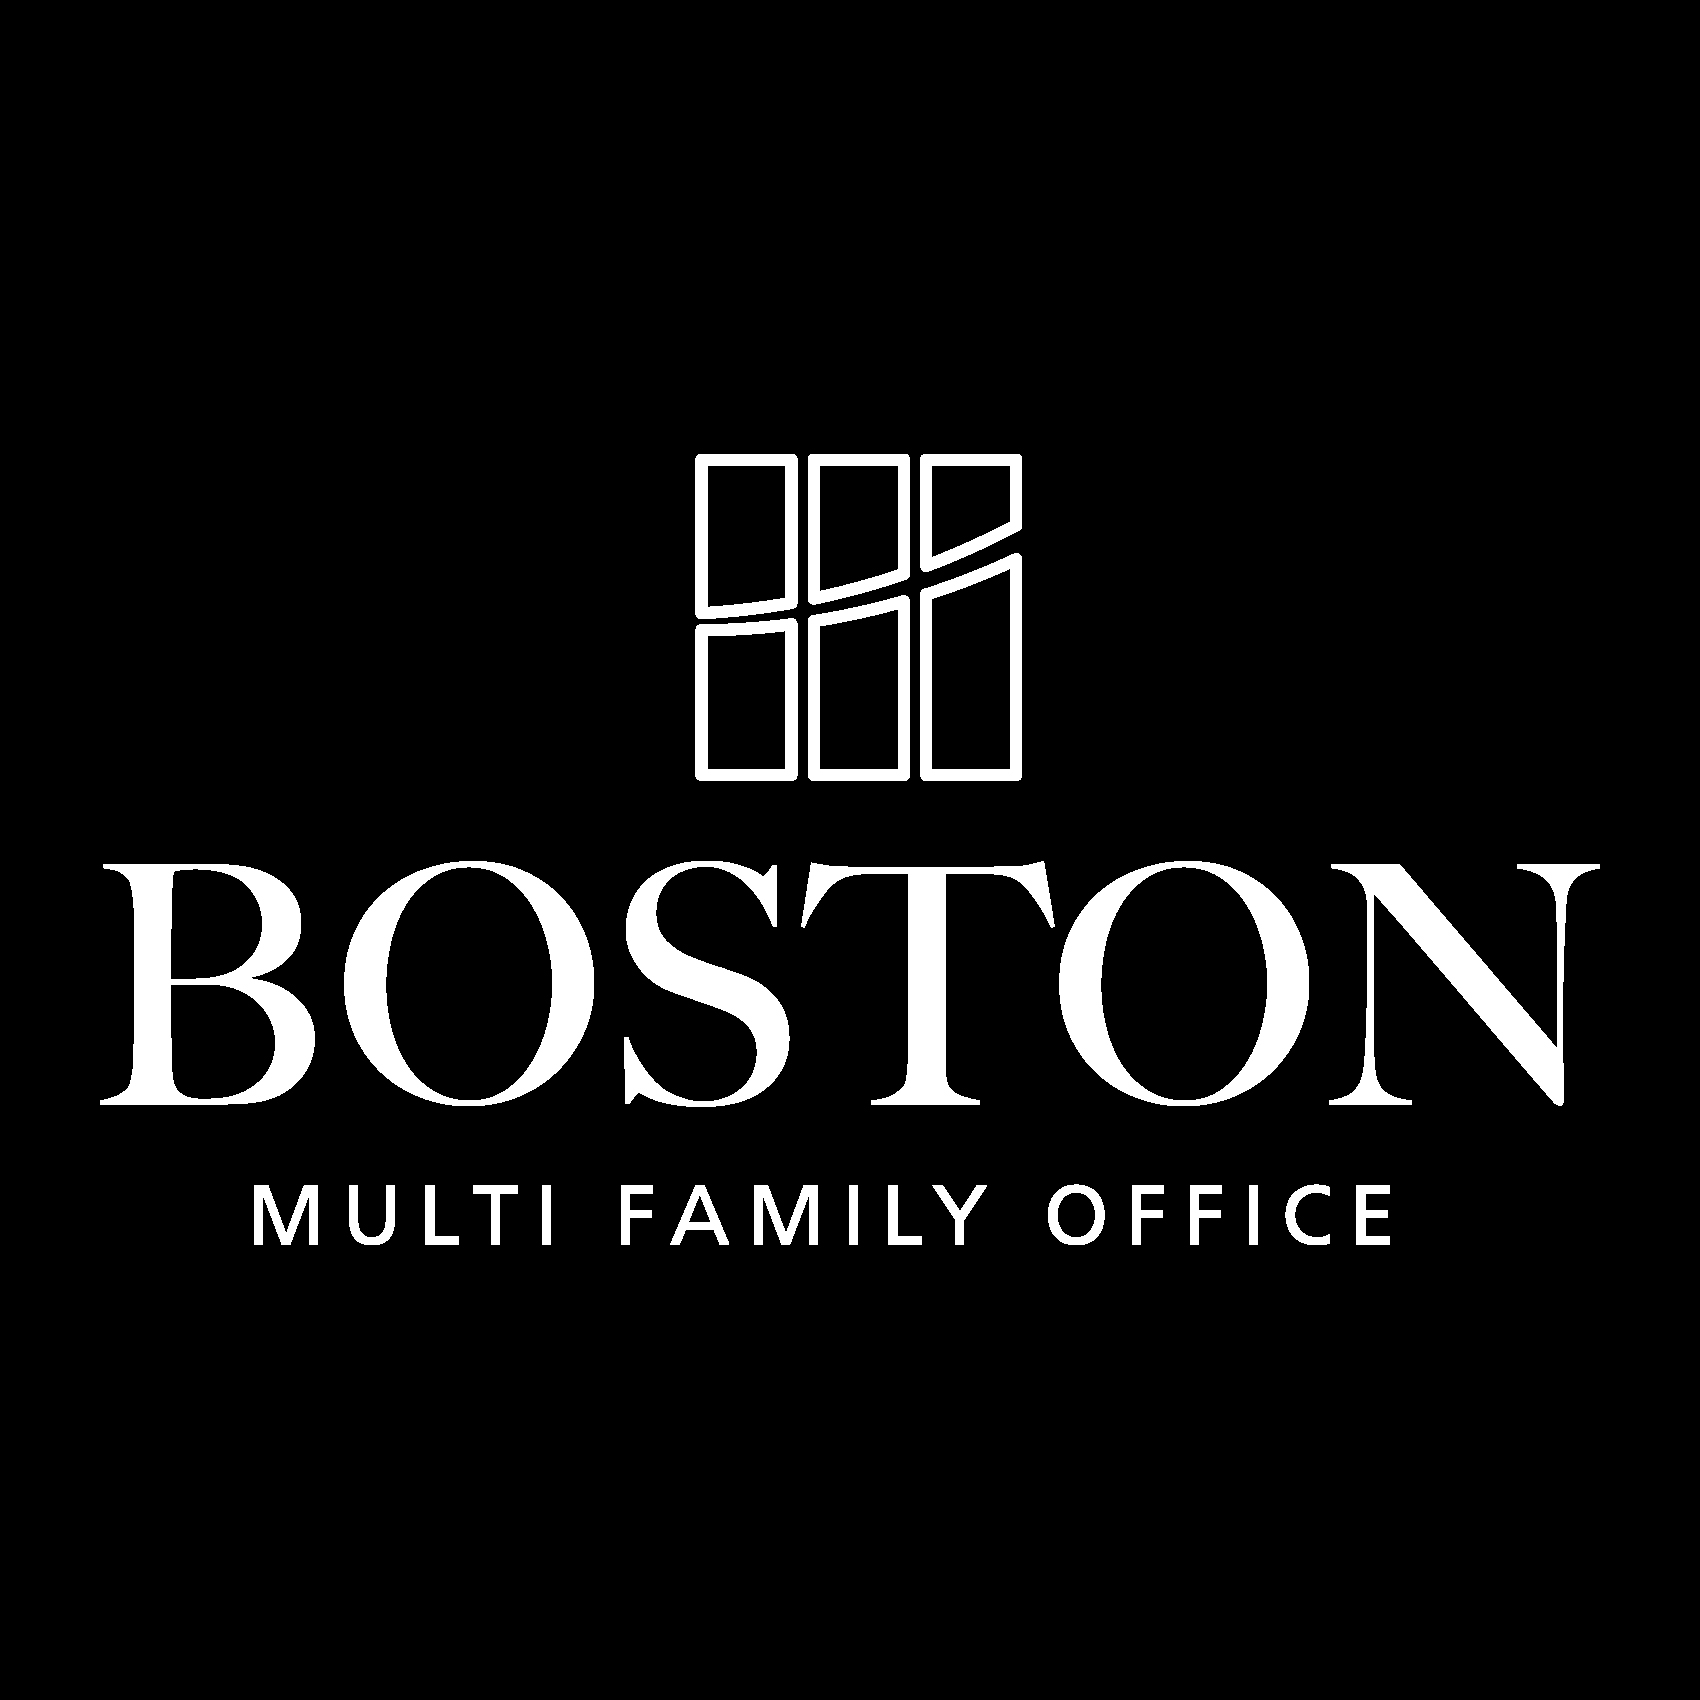 Boston Multi Family Office logo